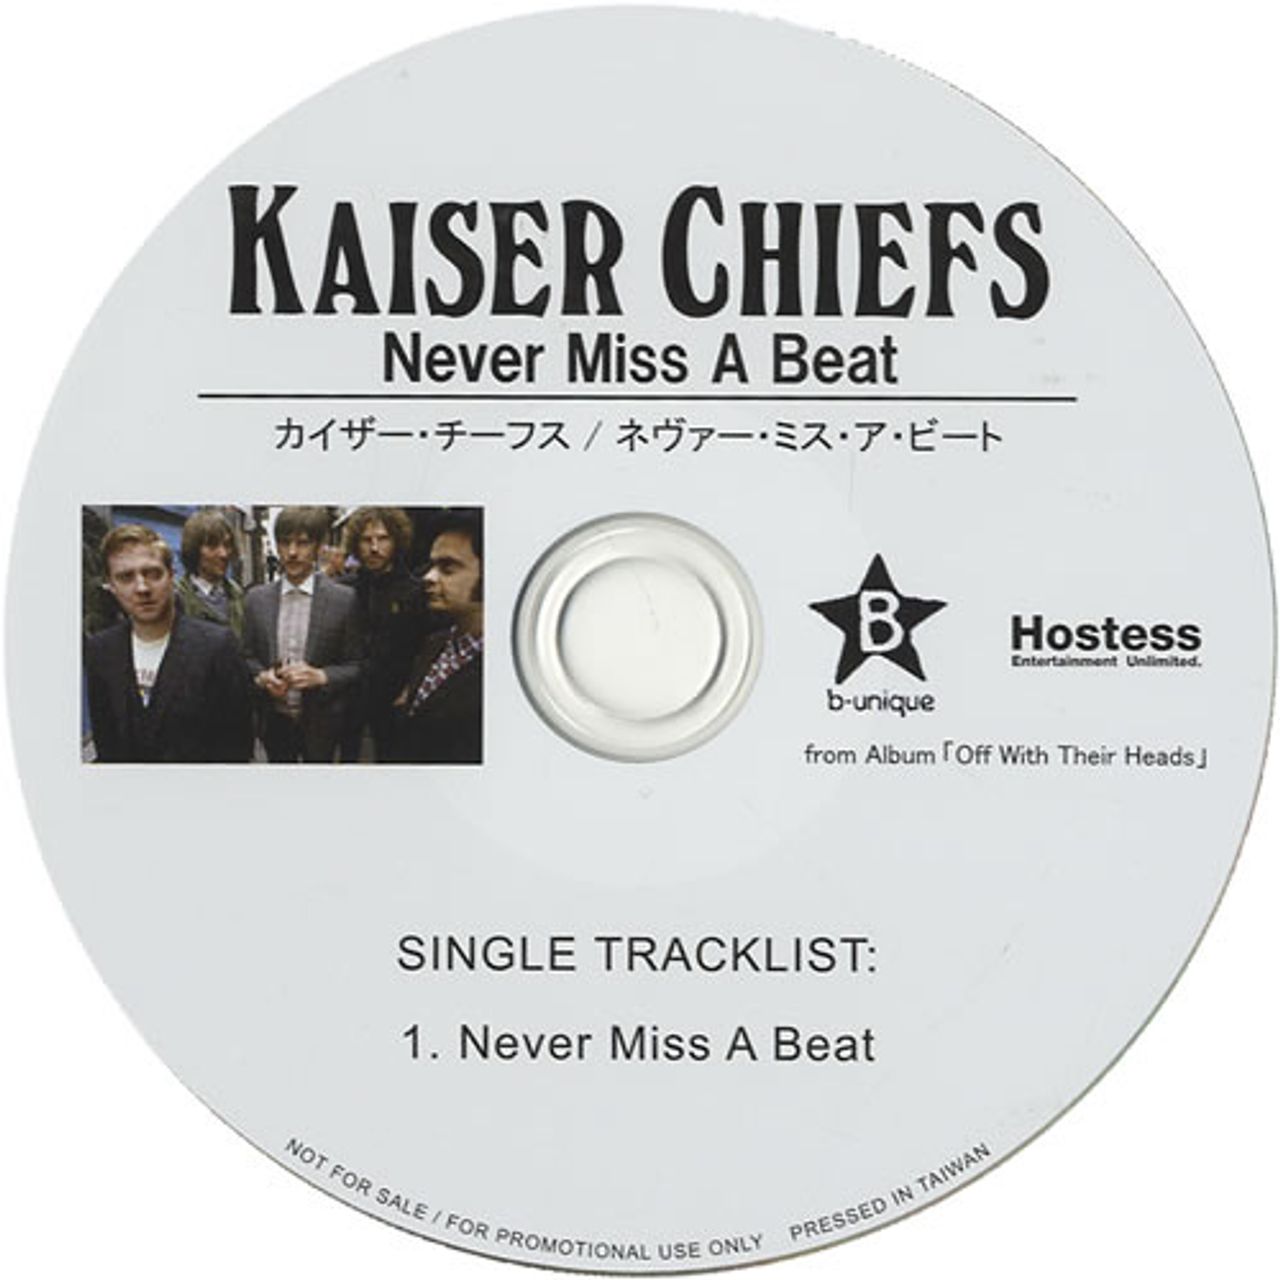 Kaiser Chiefs Miss Beat Taiwanese Promo CD single — RareVinyl.com